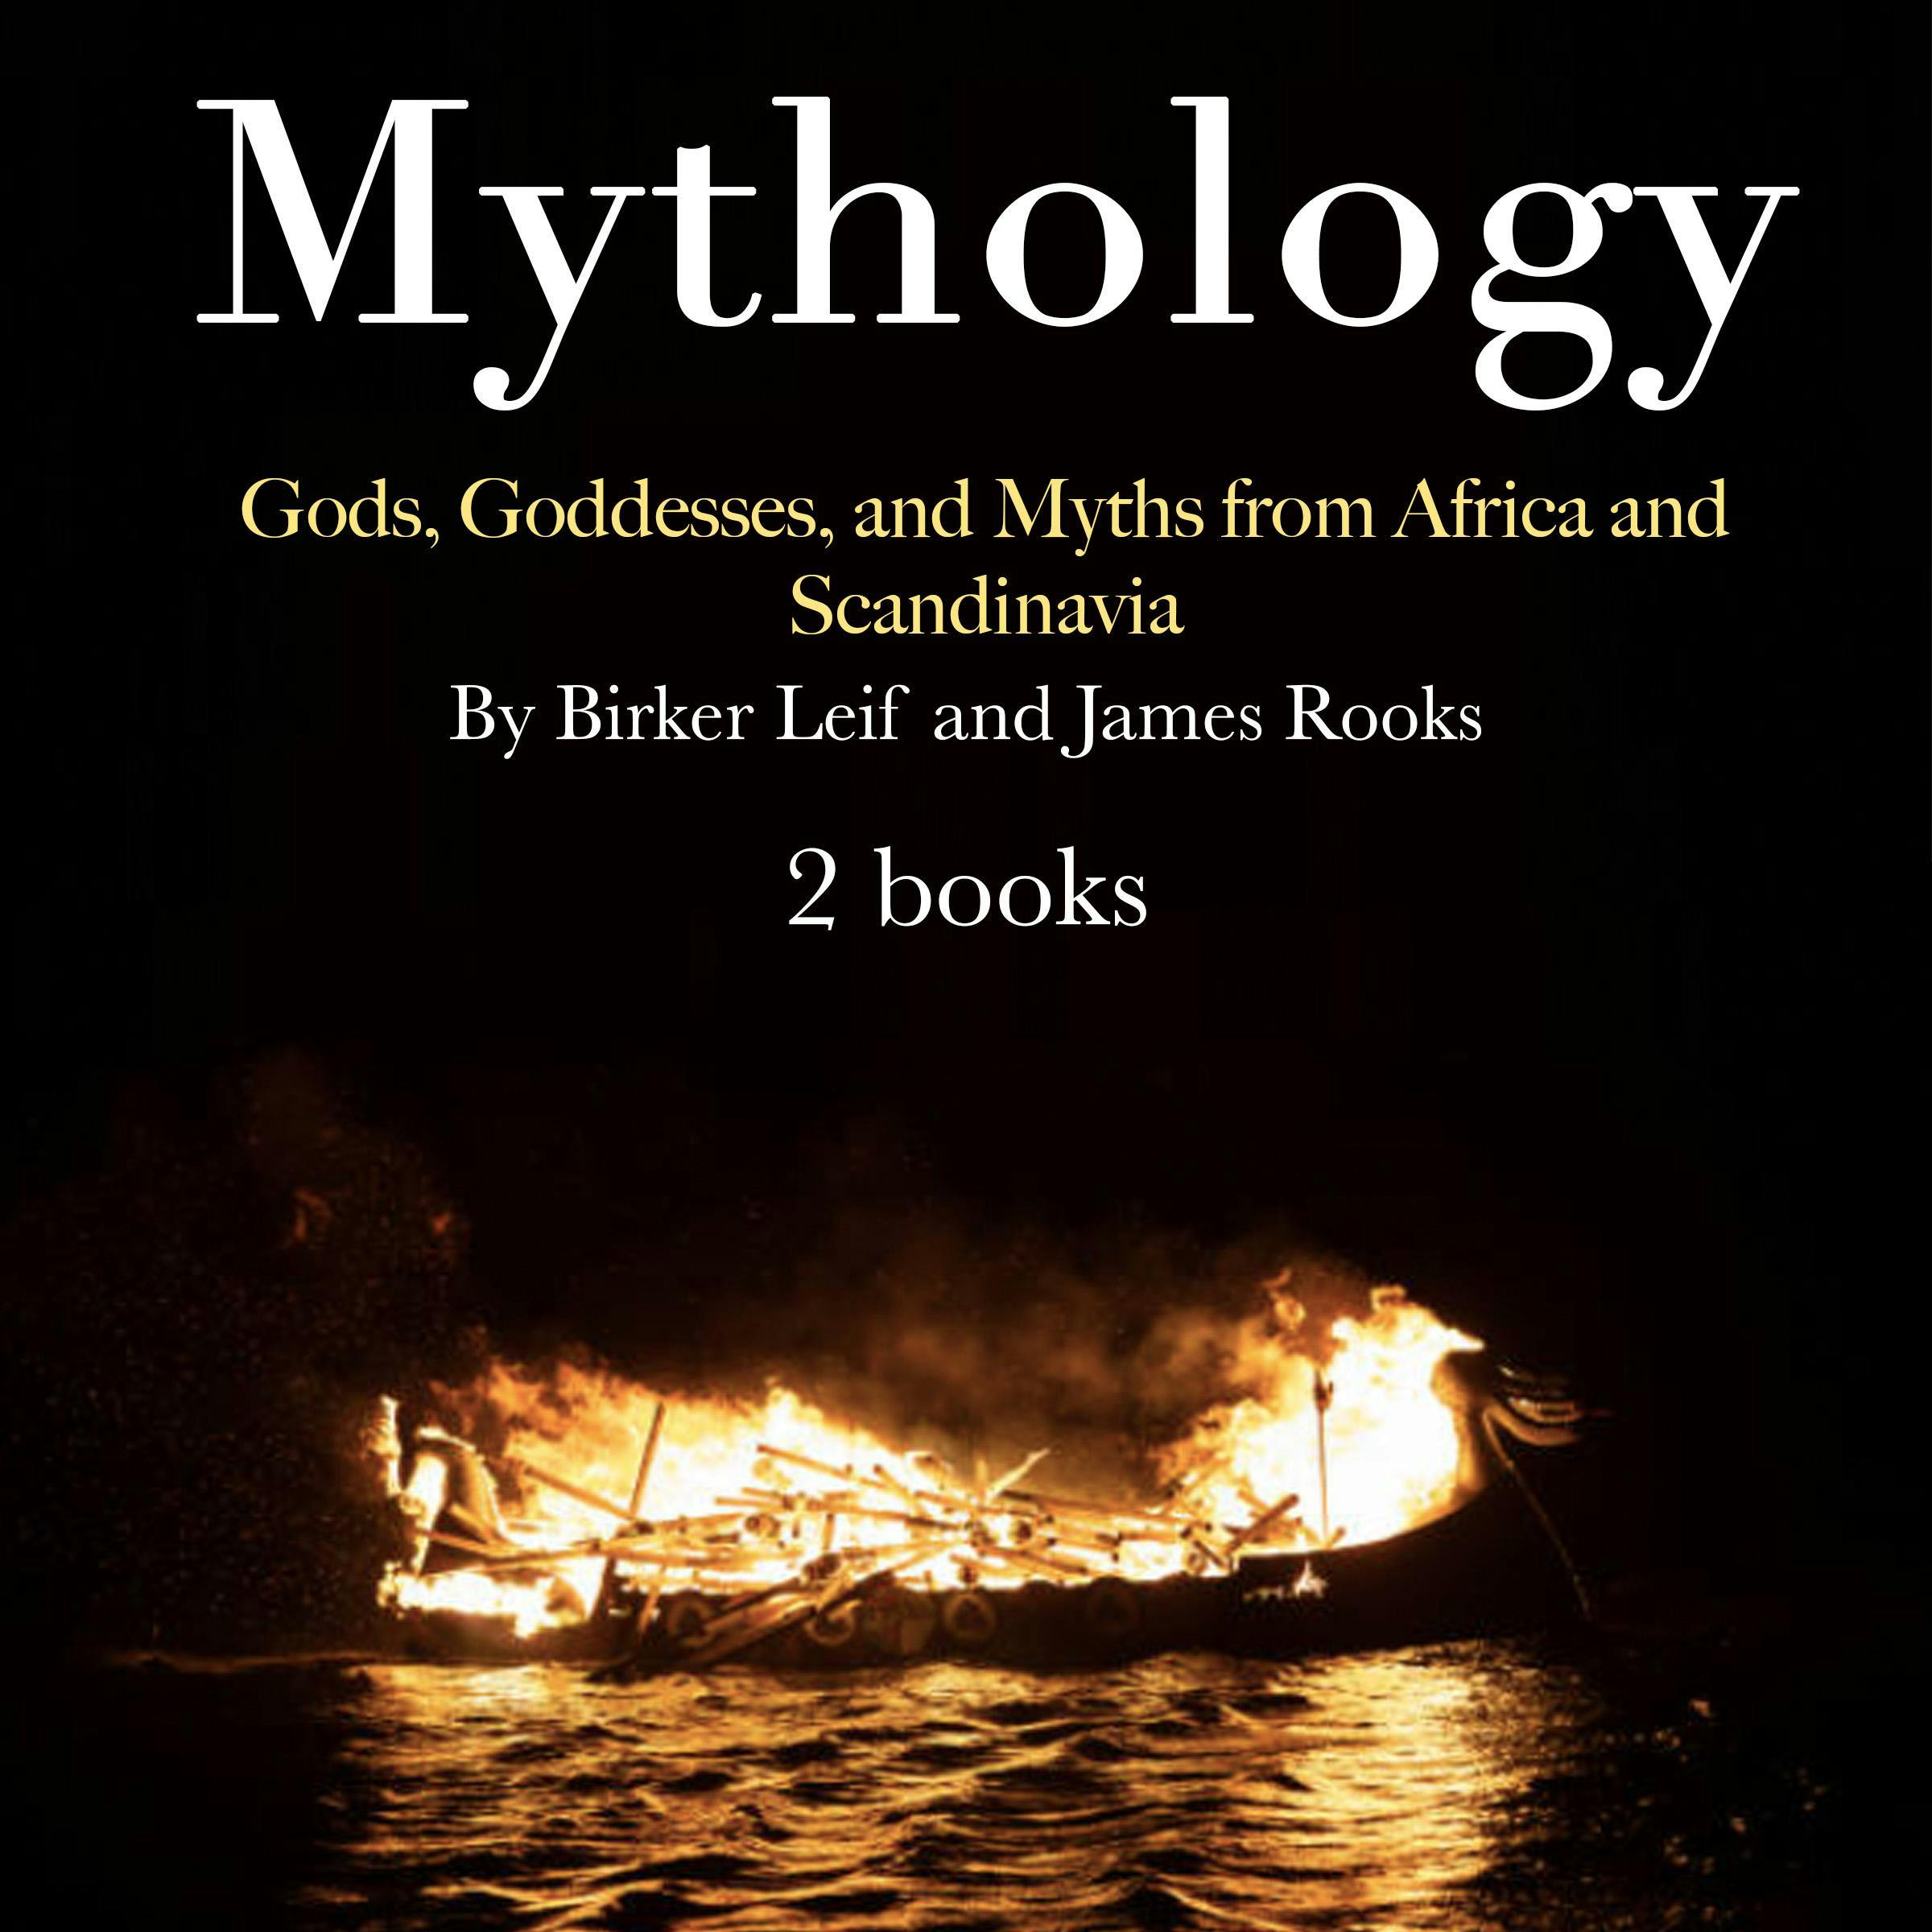 Mythology: Gods, Goddesses, and Myths from Africa and Scandinavia - James Rooks, Birker Leif